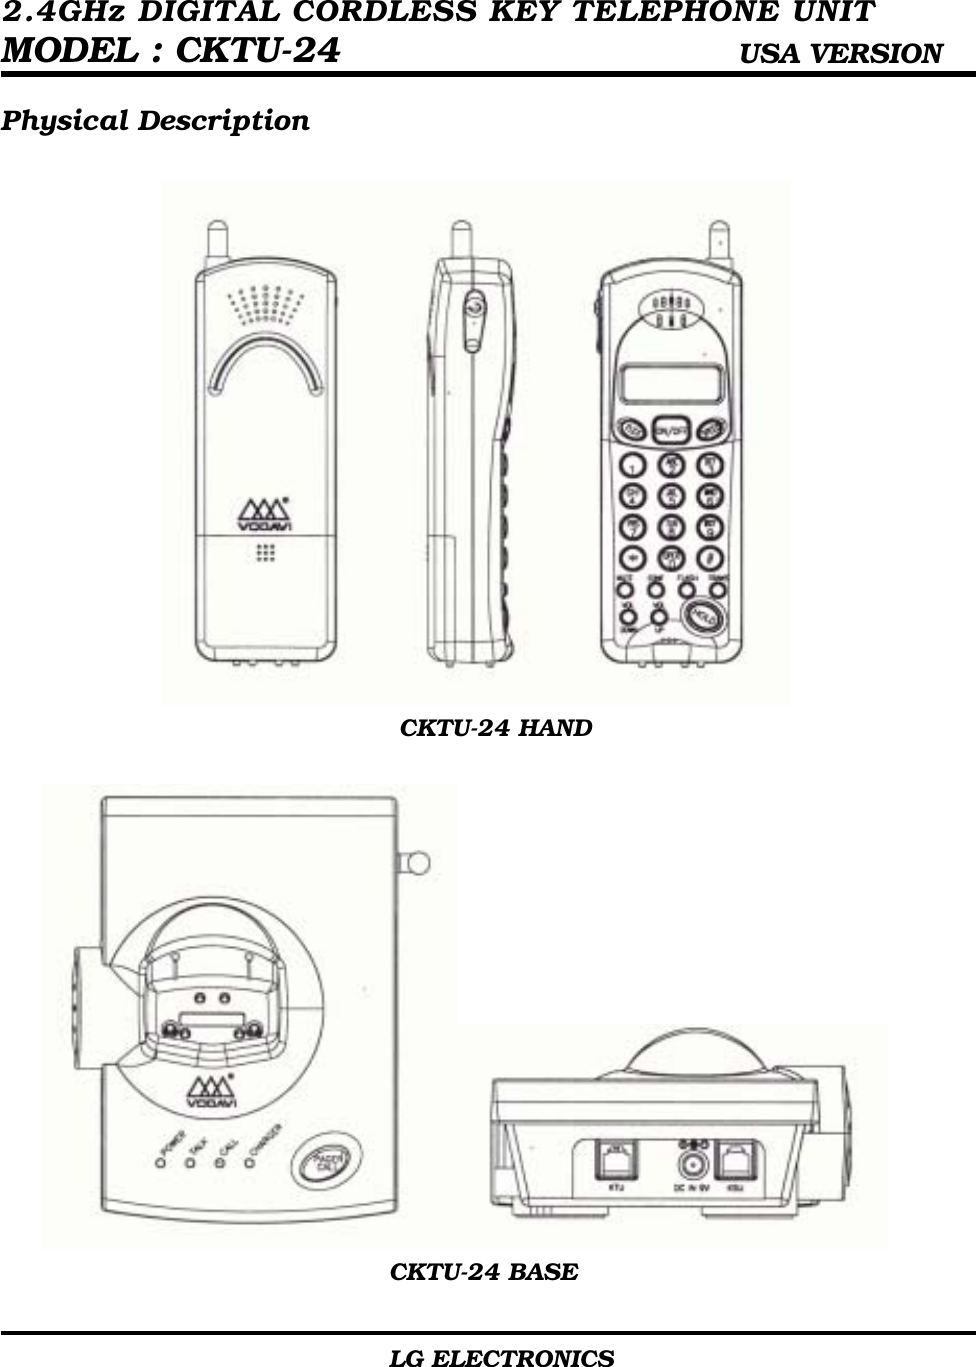  2.4GHz DIGITAL CORDLESS KEY TELEPHONE UNIT   MODEL : CKTU-24                      USA VERSION                                        LG ELECTRONICS                           Physical Description                                          CKTU-24 HAND                                         CKTU-24 BASE 